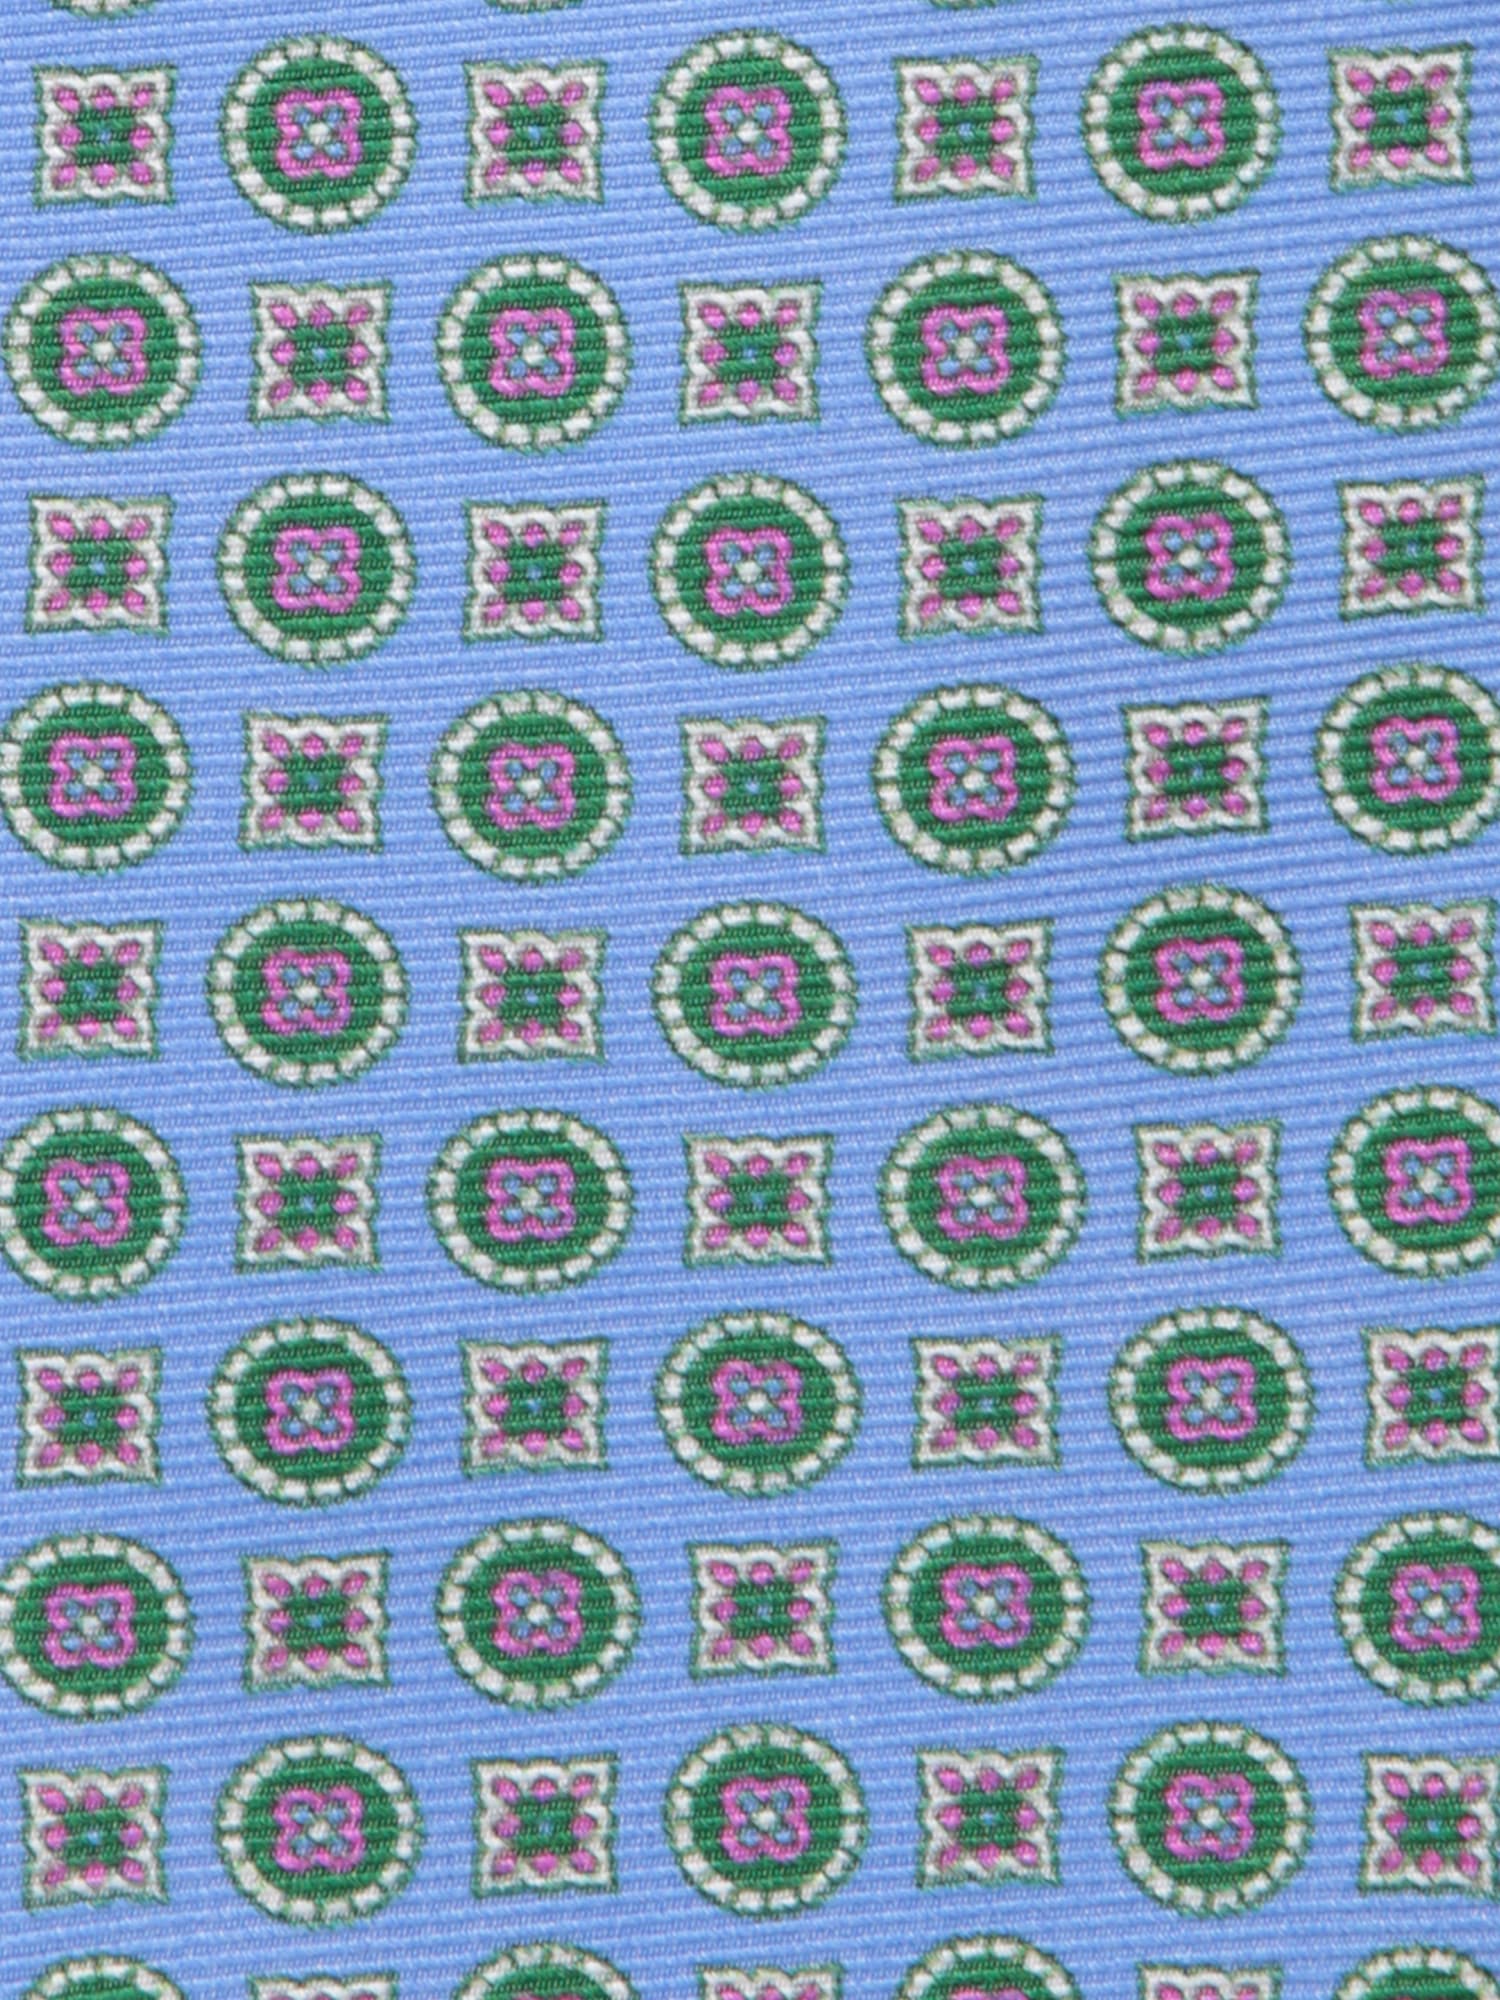 Shop Kiton Micro-pattern Fuchsia Tie In Blue